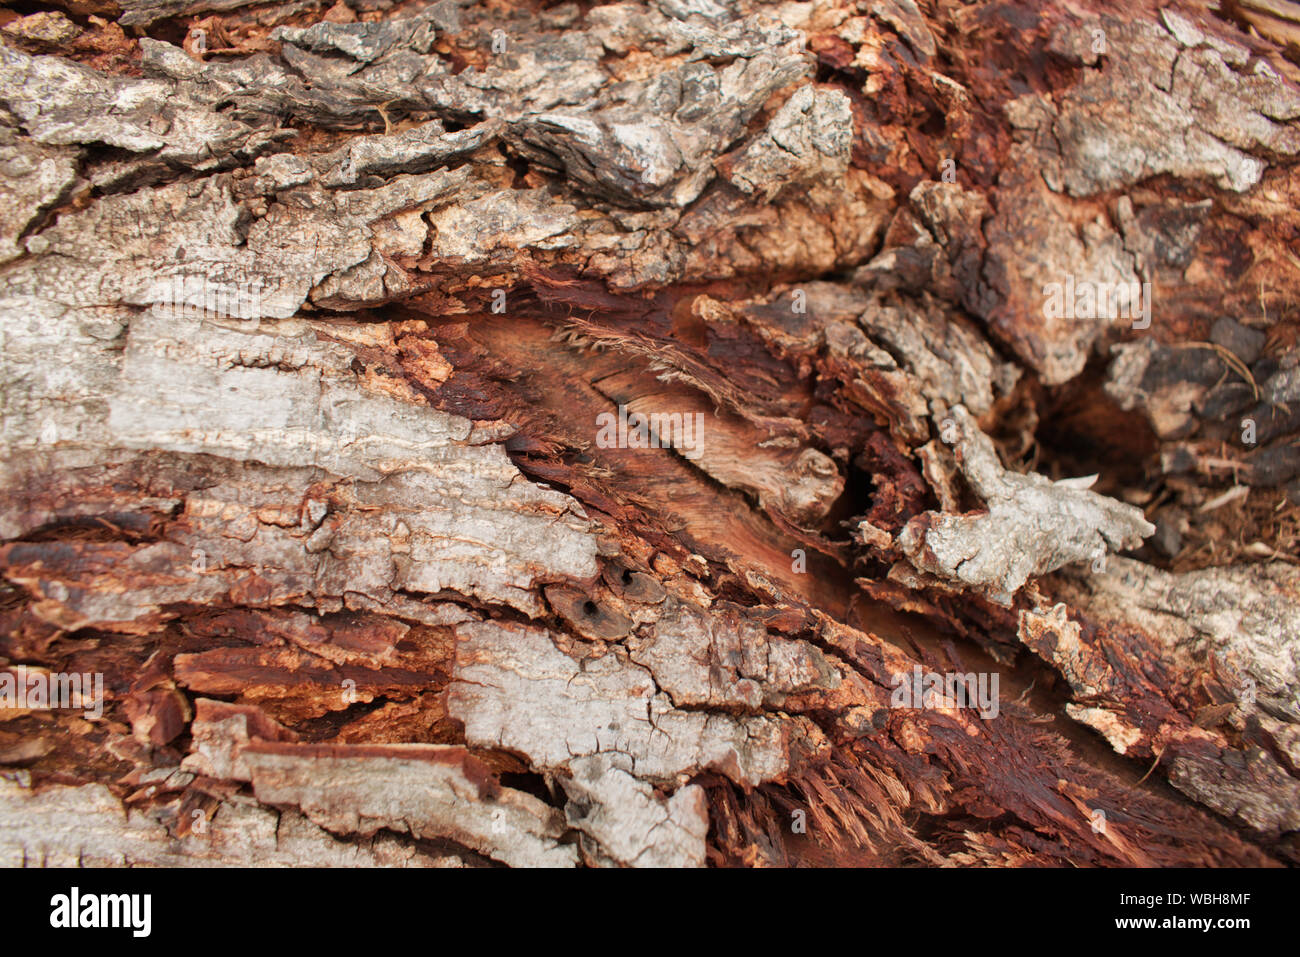 Brow tree bark, rough texture of tree bark with cracks Stock Photo